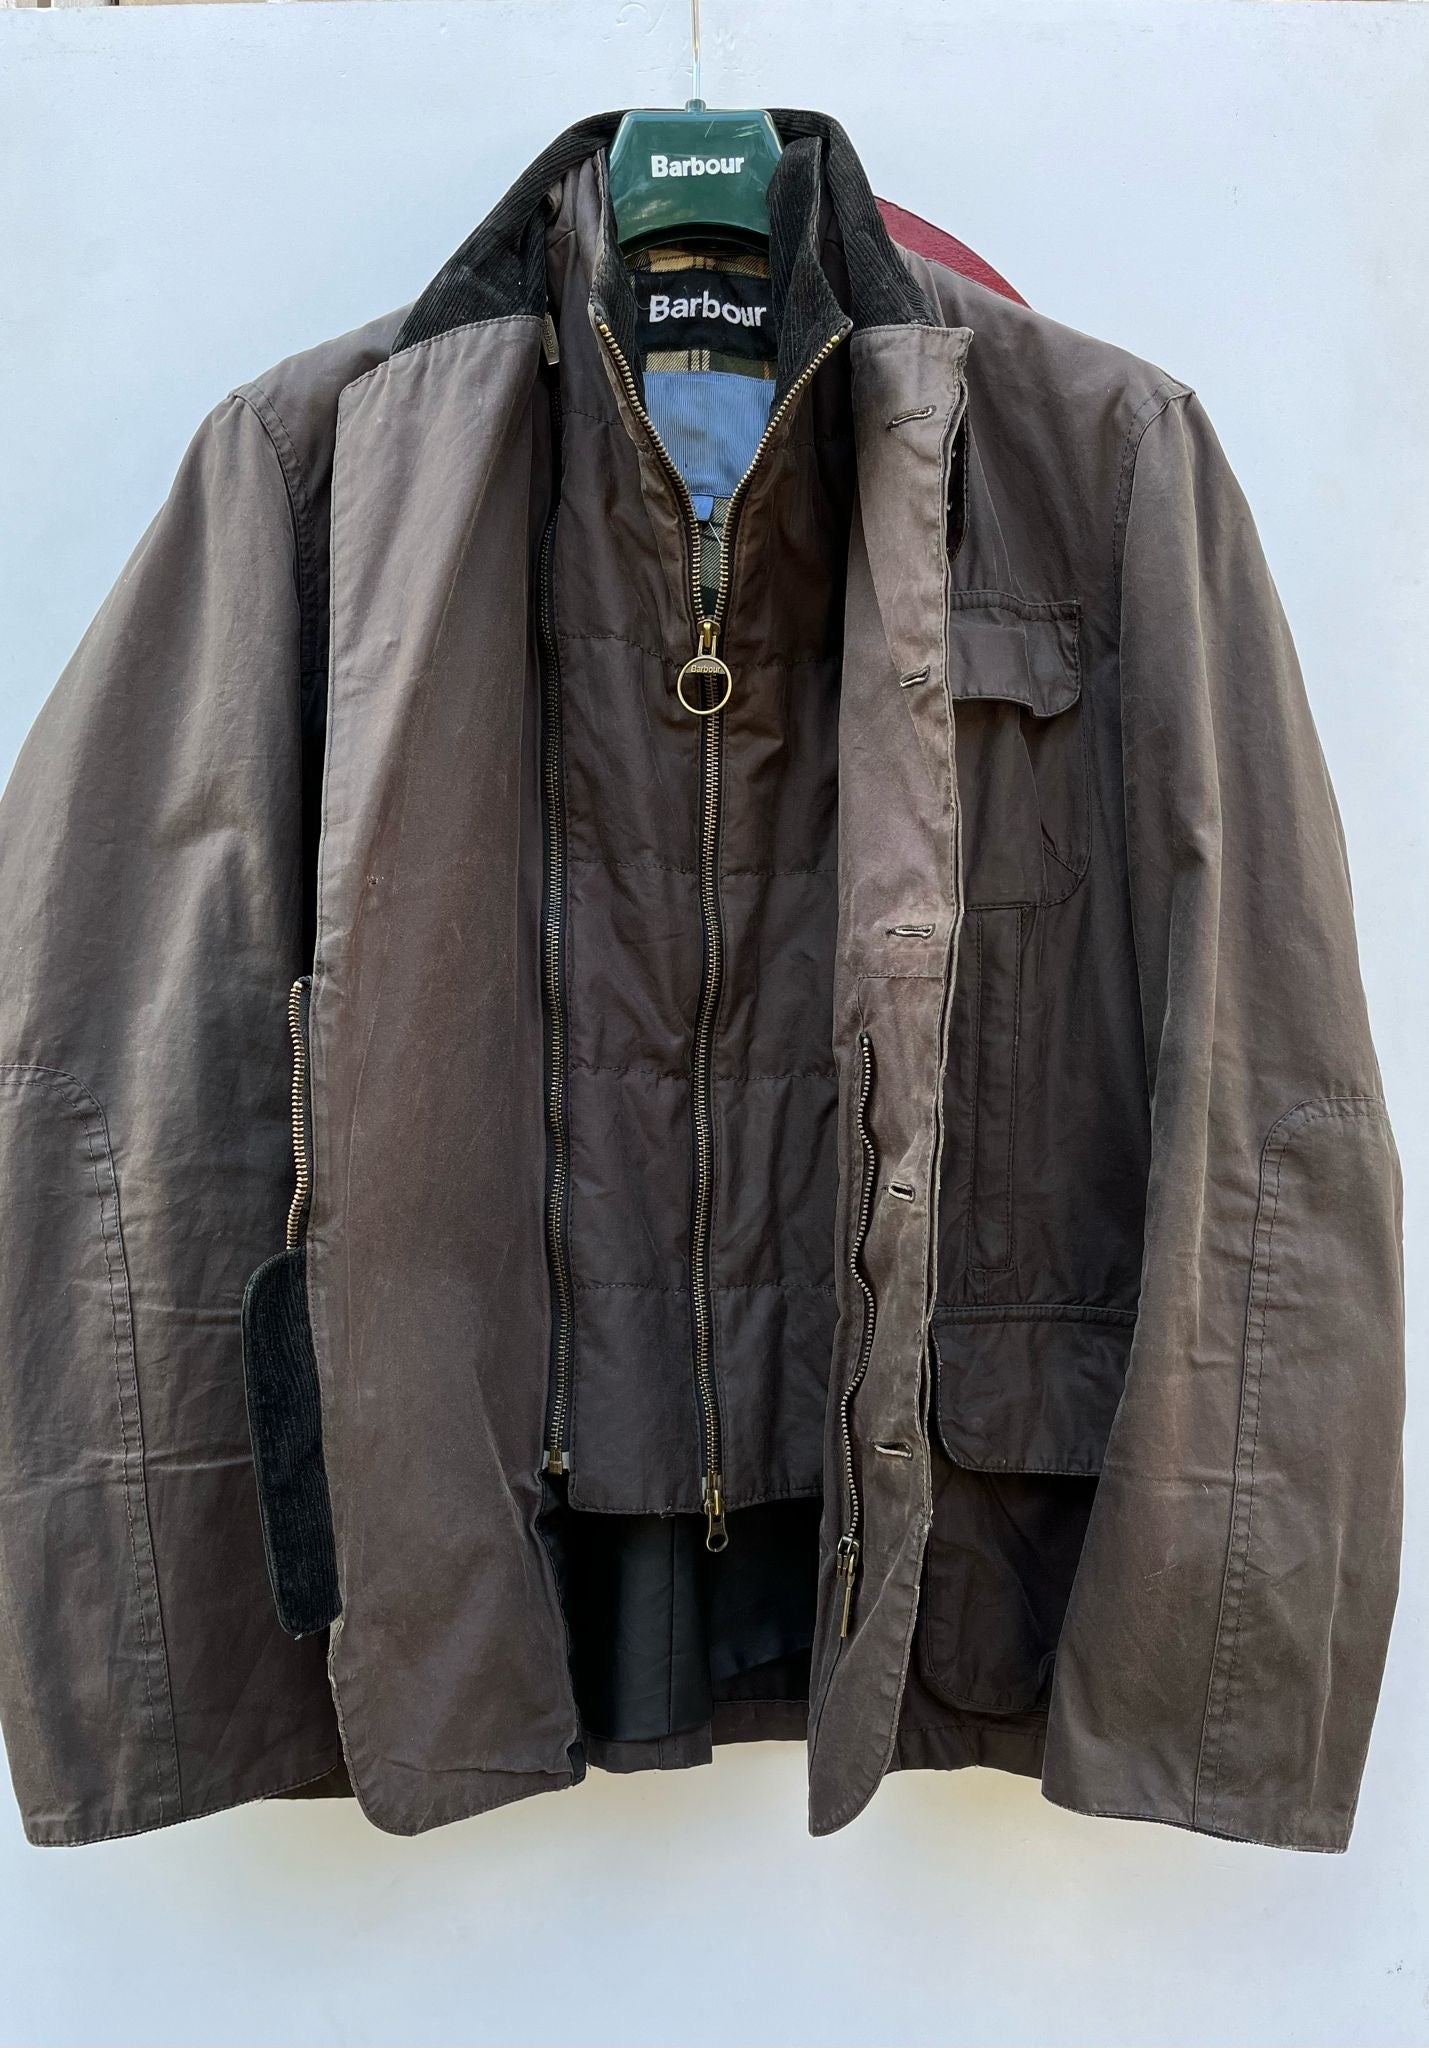 Giacca Barbour grigia cerata Bezique Joe-Casely for John Lewis taglia XL-Man Wax Grey jacket size XL